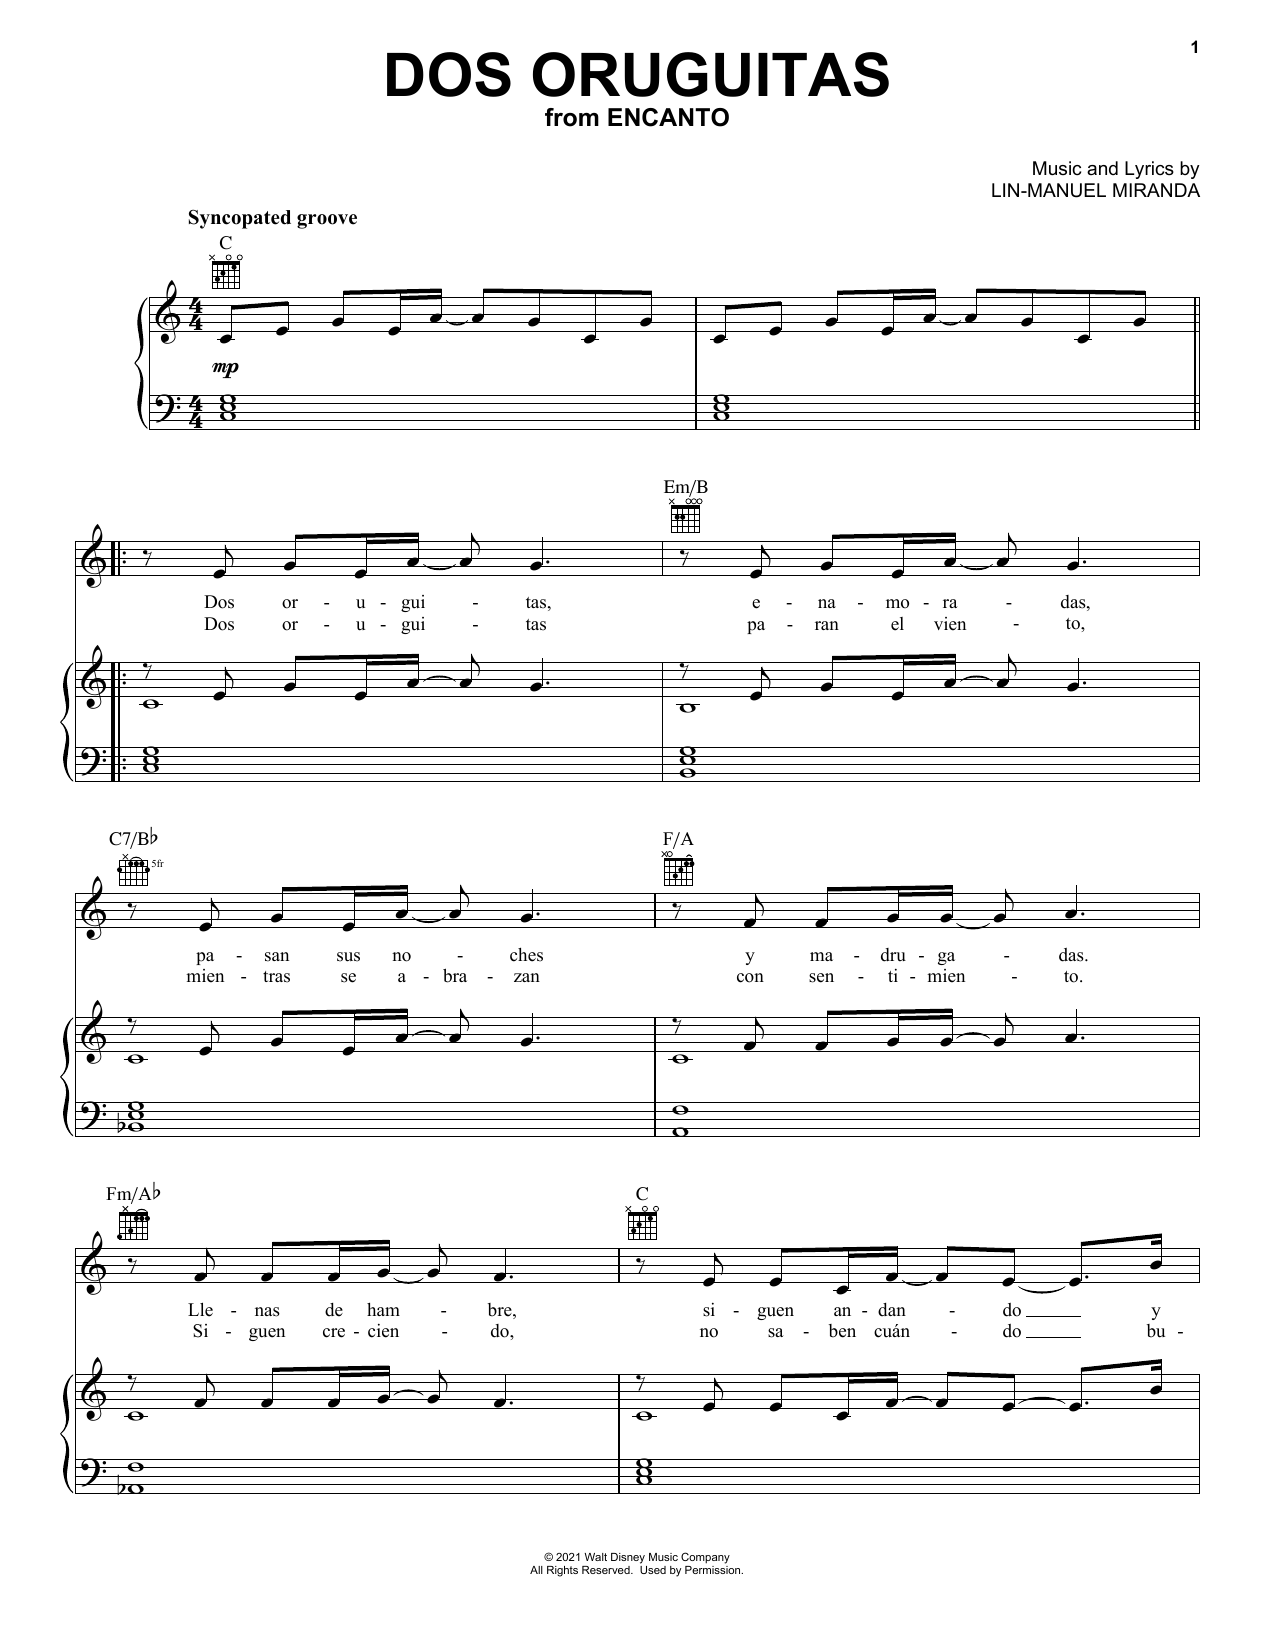 Lin-Manuel Miranda Dos Oruguitas (from Encanto) Sheet Music Notes & Chords for Easy Guitar Tab - Download or Print PDF